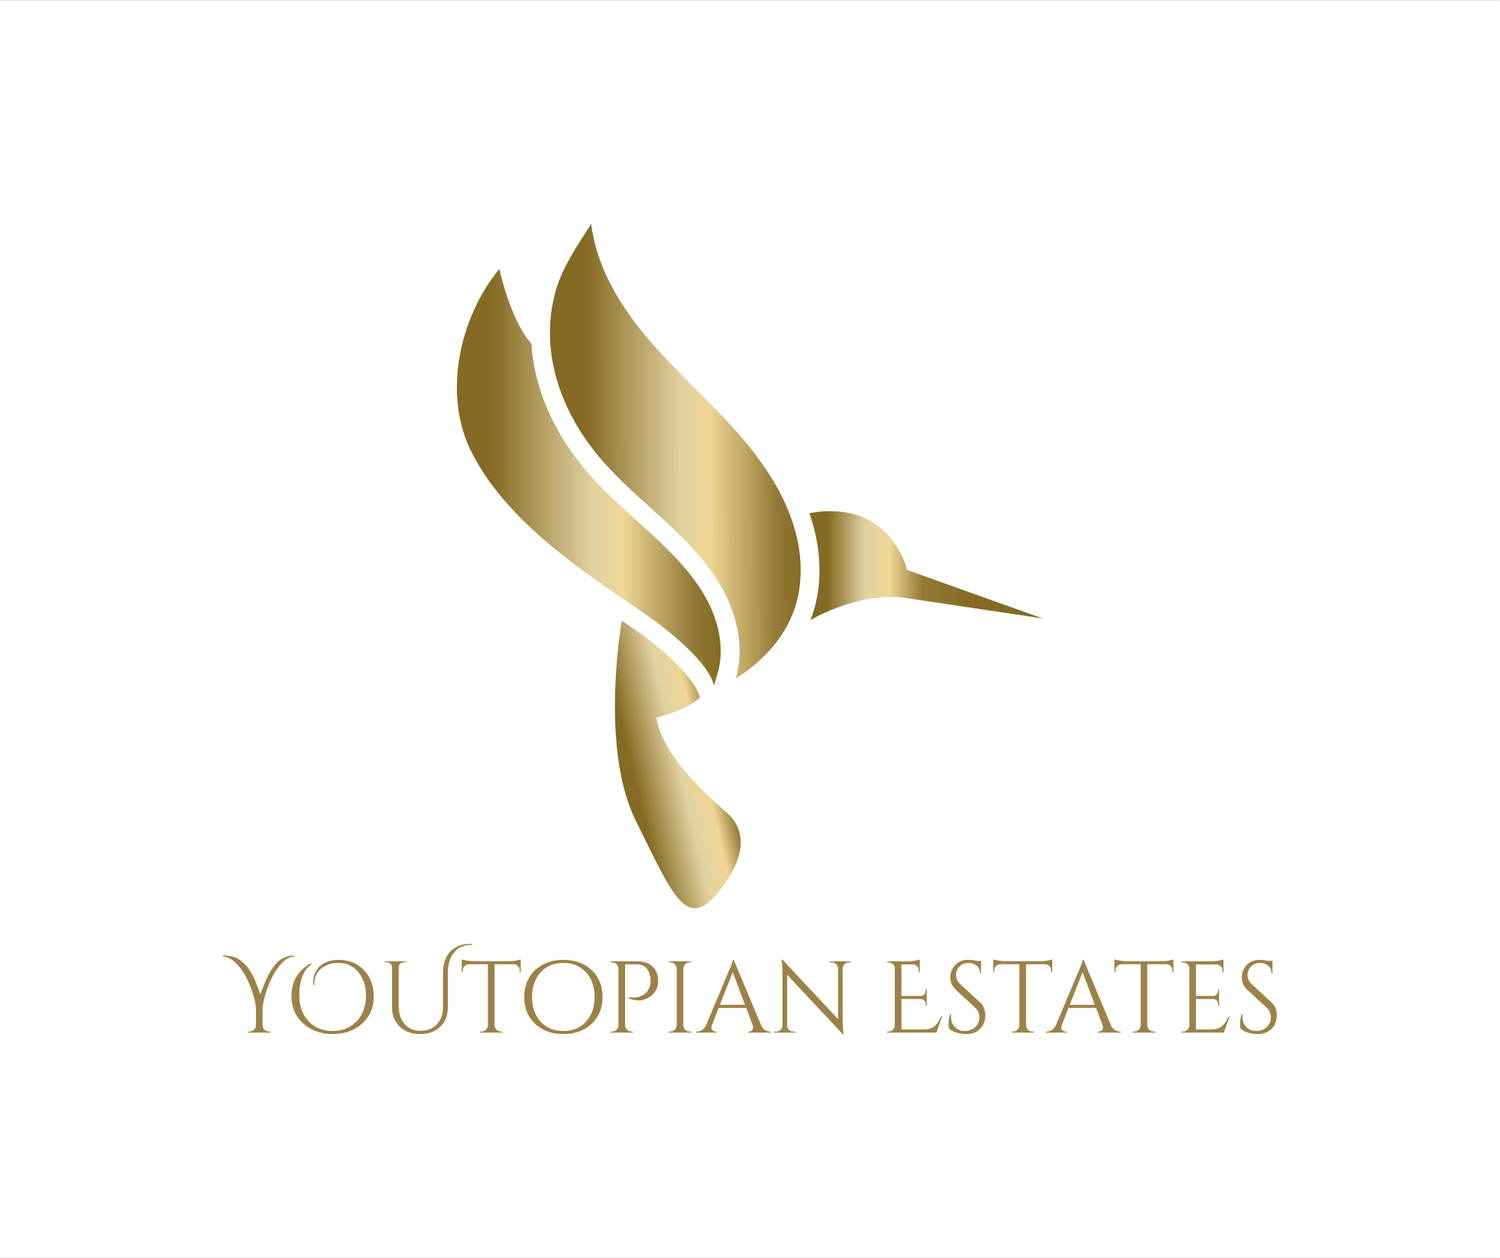 YOUtopian Estates